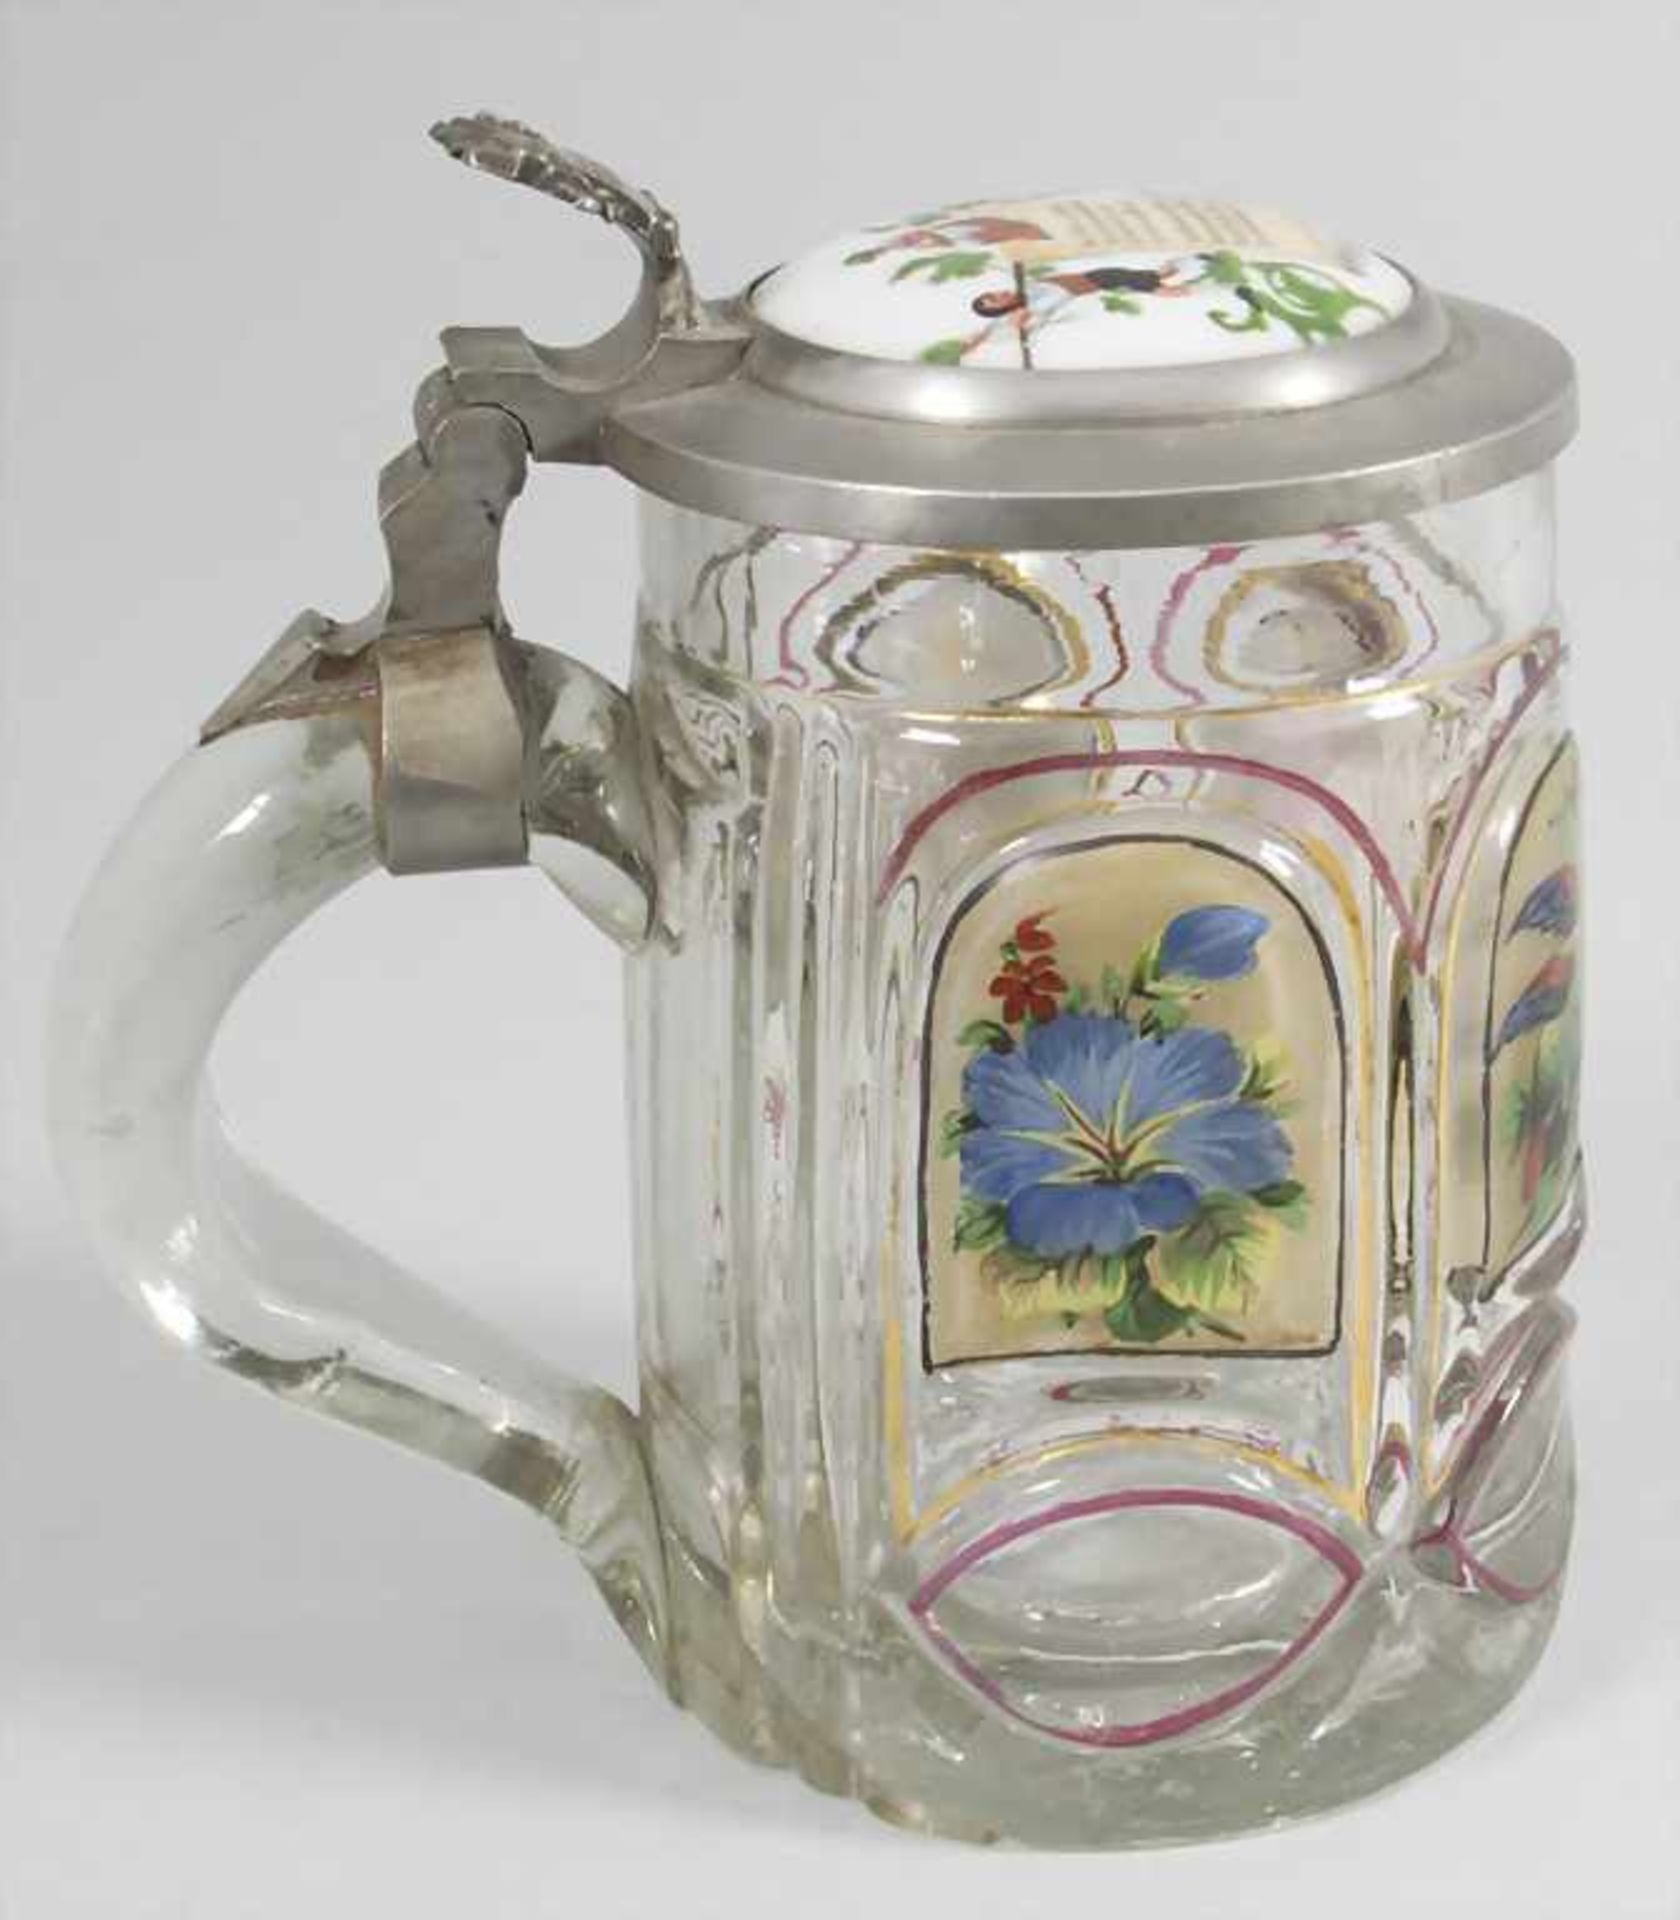 Glaskrug mit Figuren, Rosen und Vögeln / A glass jug with figures, birds and rosesMat - Image 2 of 5